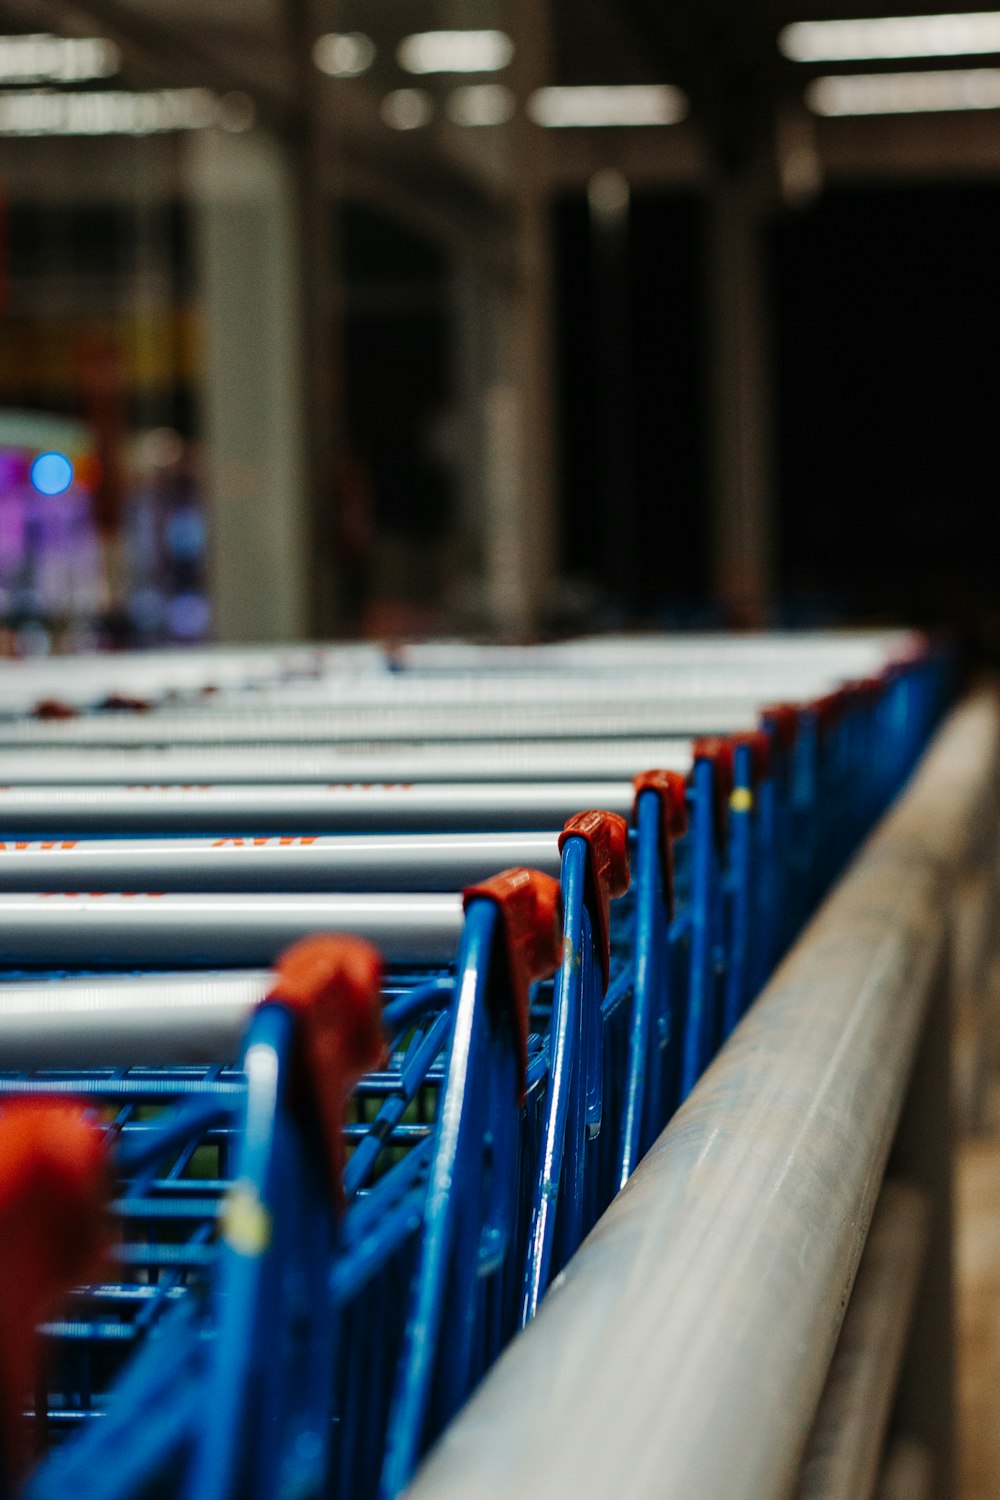 blue and gray shopping carts